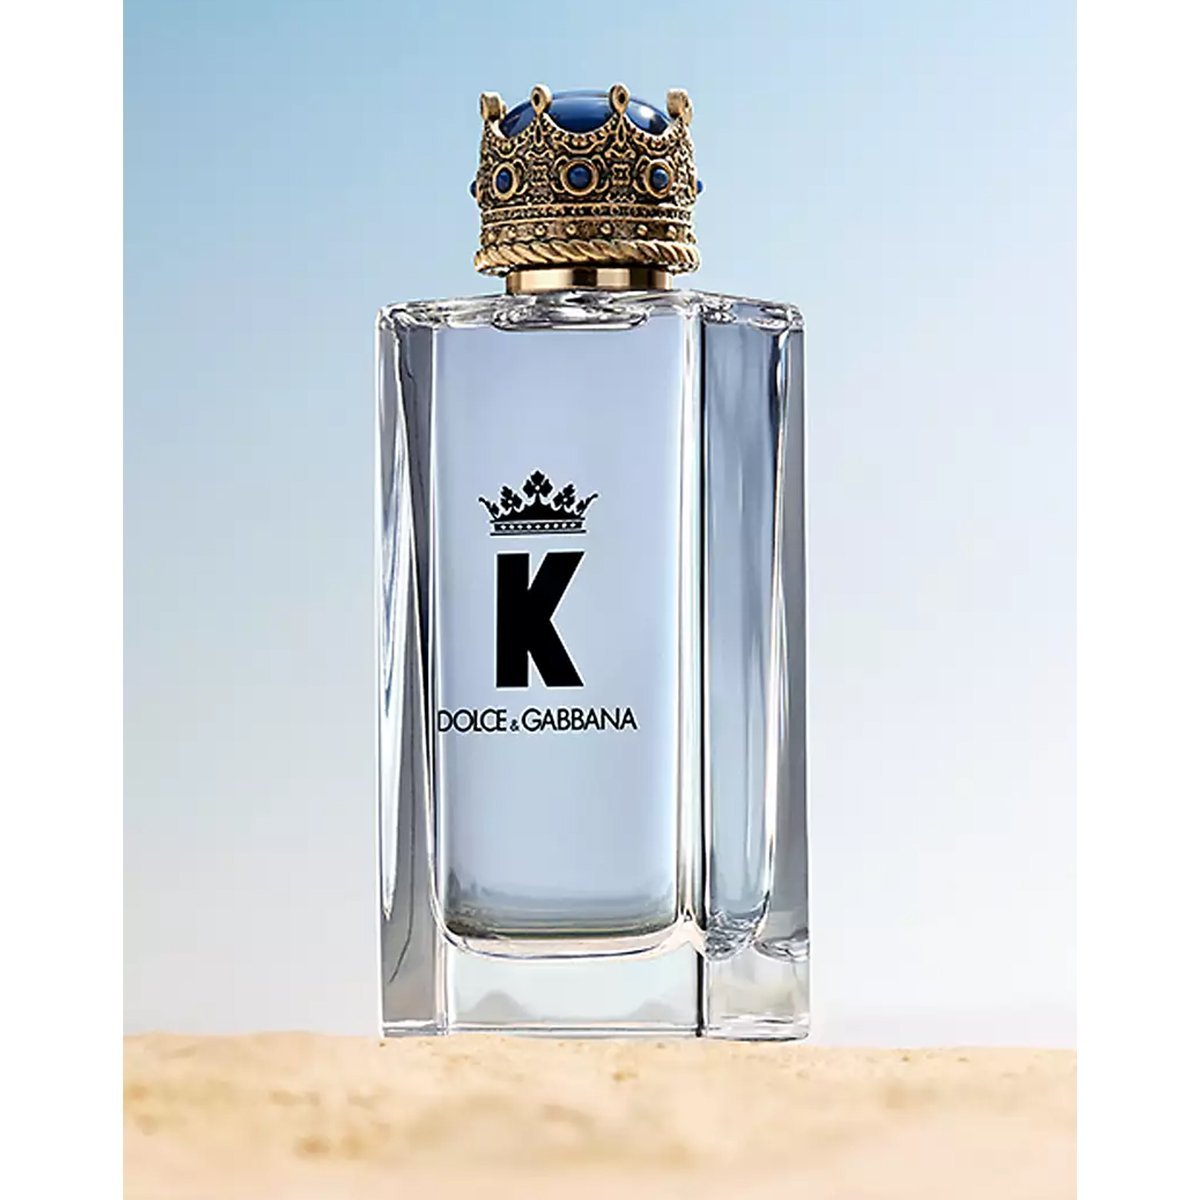 Dolce & Gabbana K EDT For Men - My Perfume Shop Australia